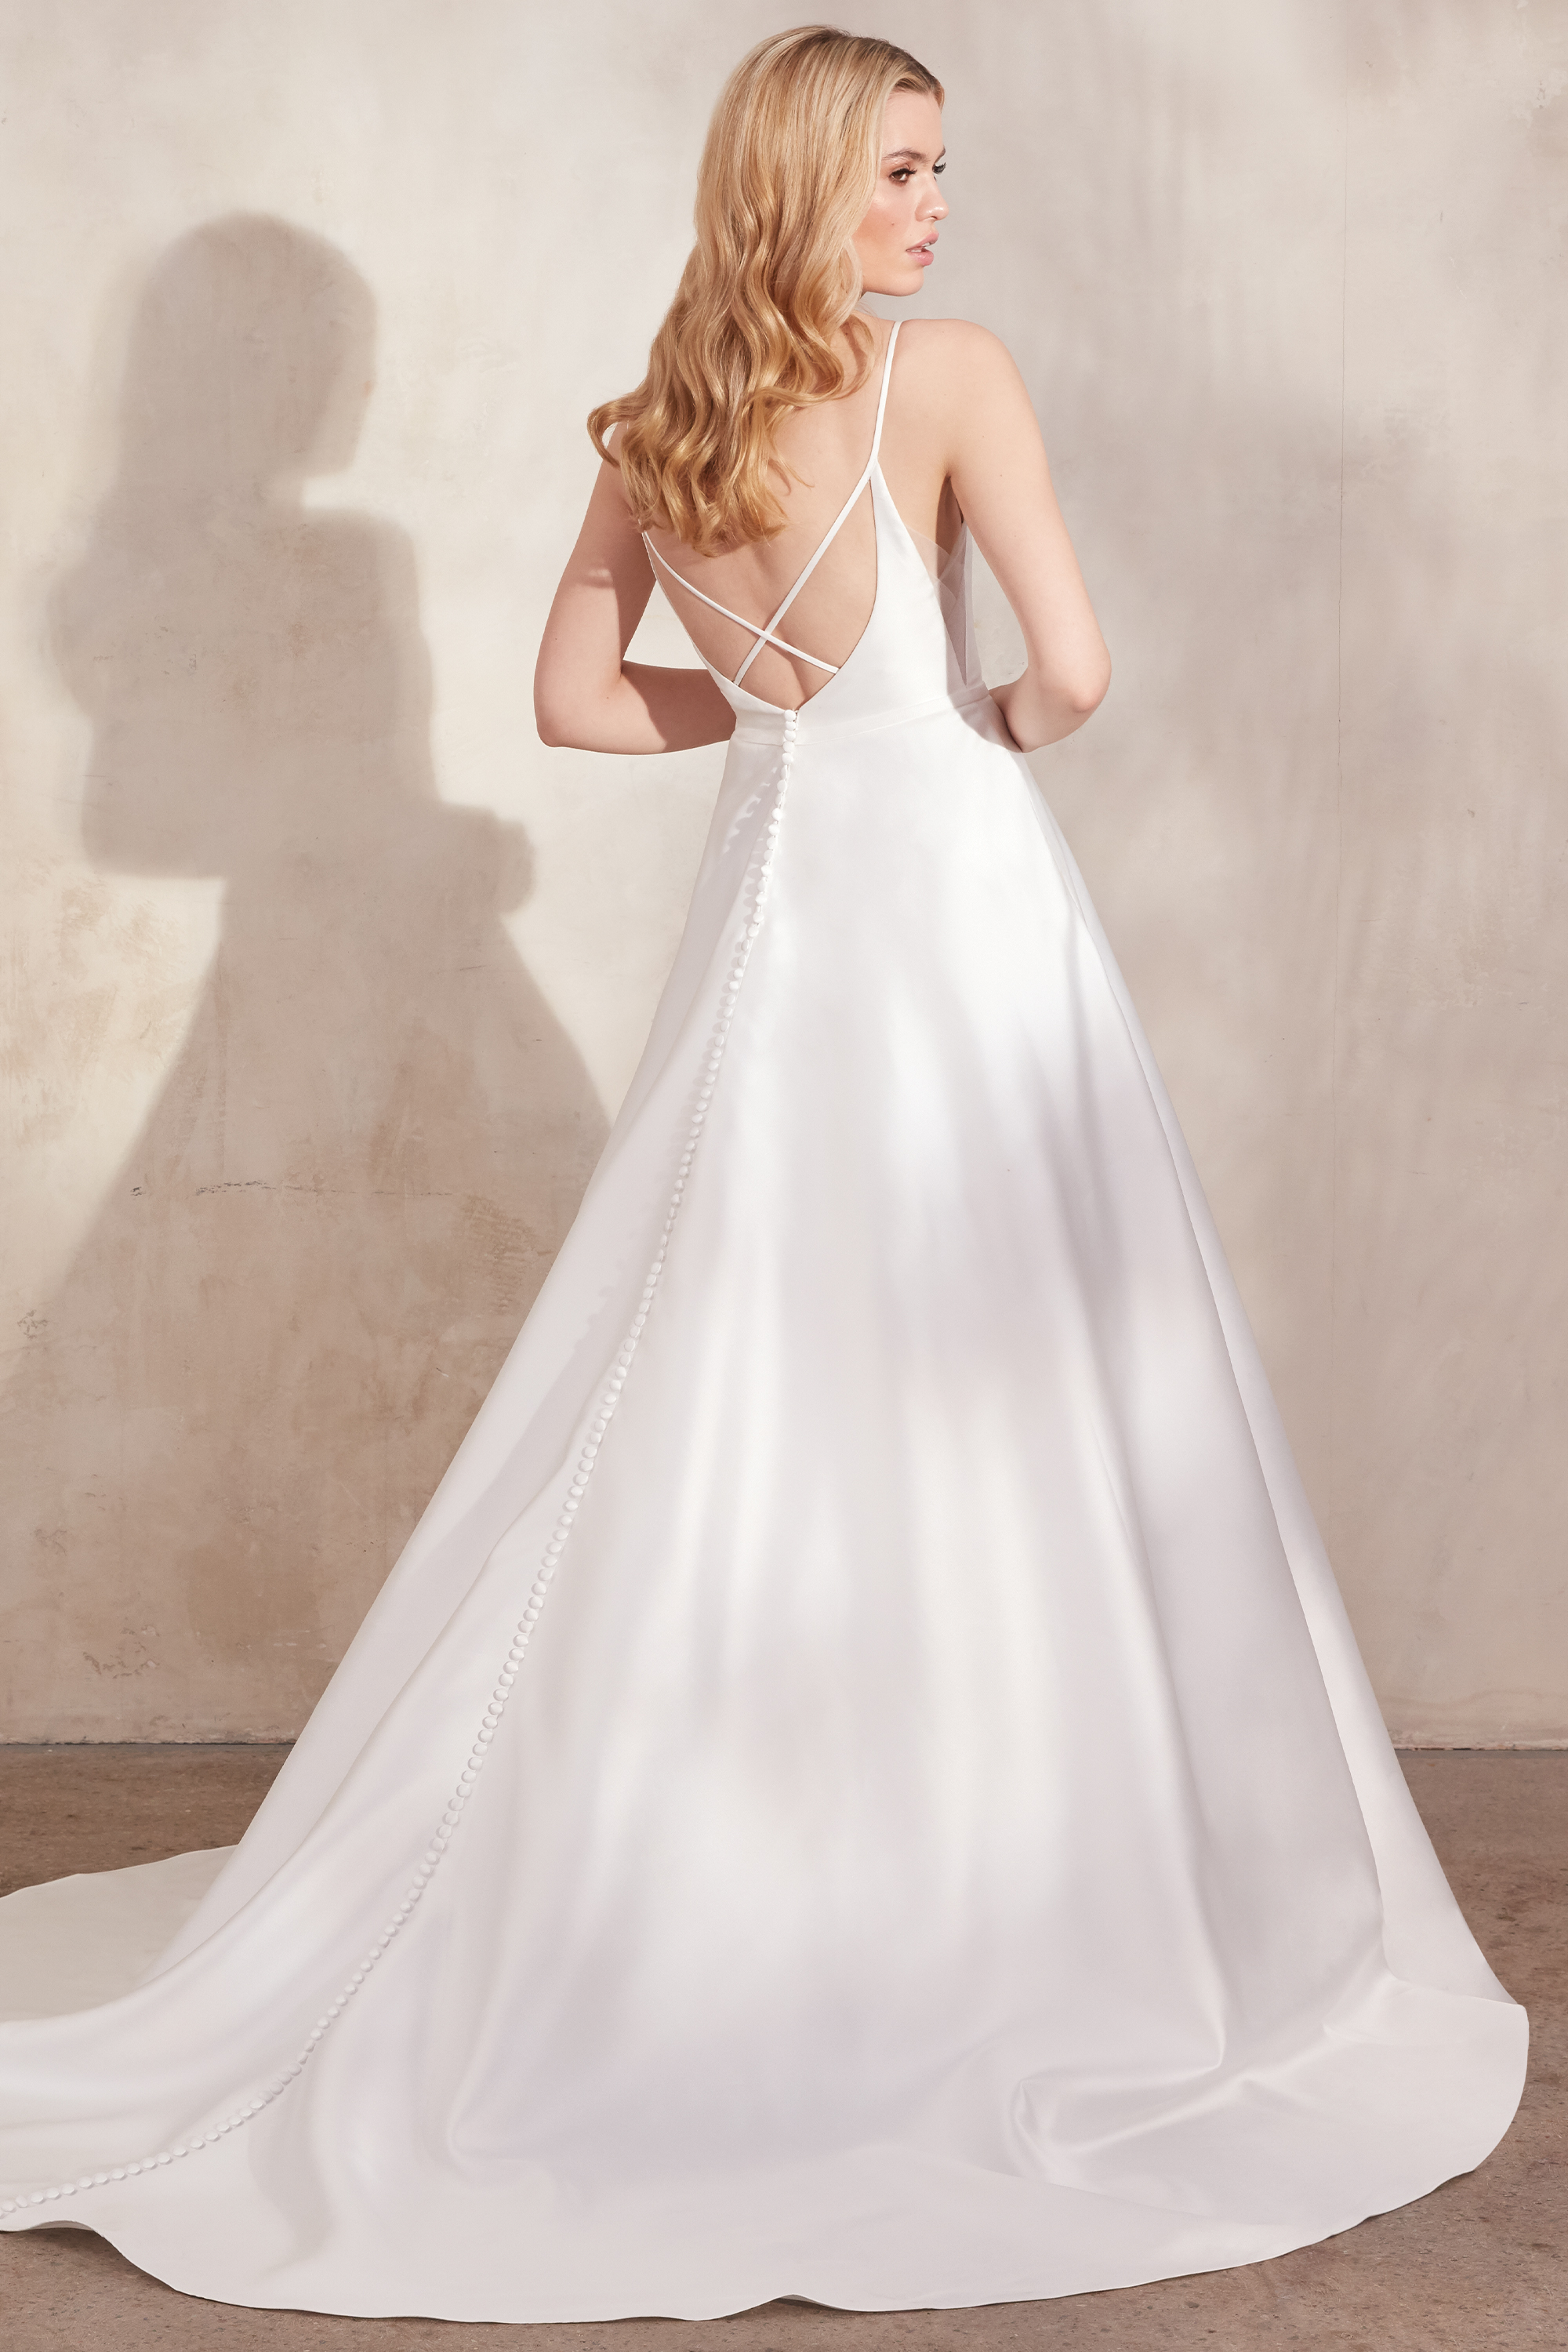 Halo wedding dress by Justin Alexander